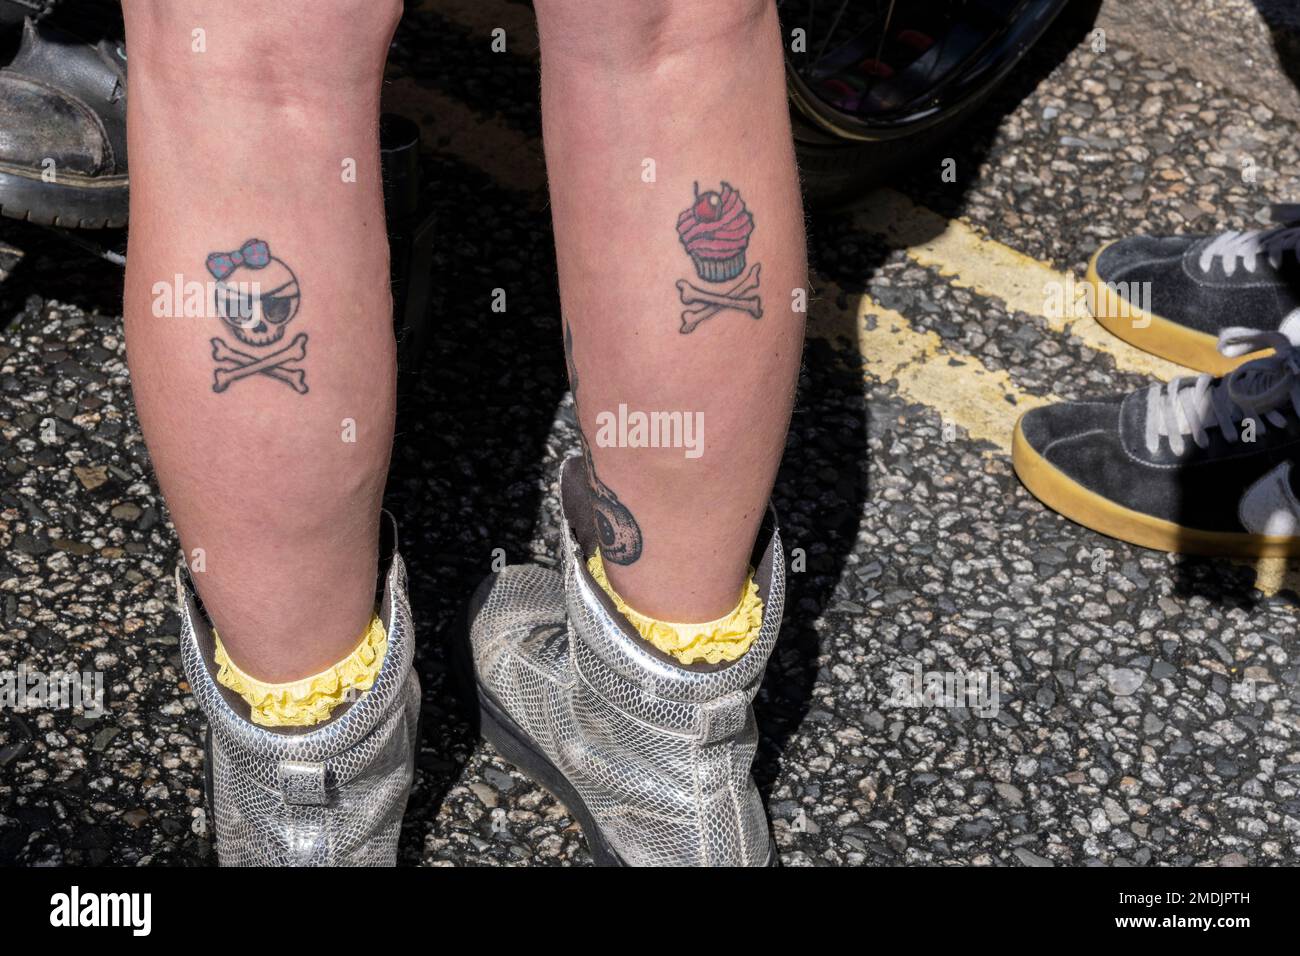 Tattoos on the calves of legs. Stock Photo